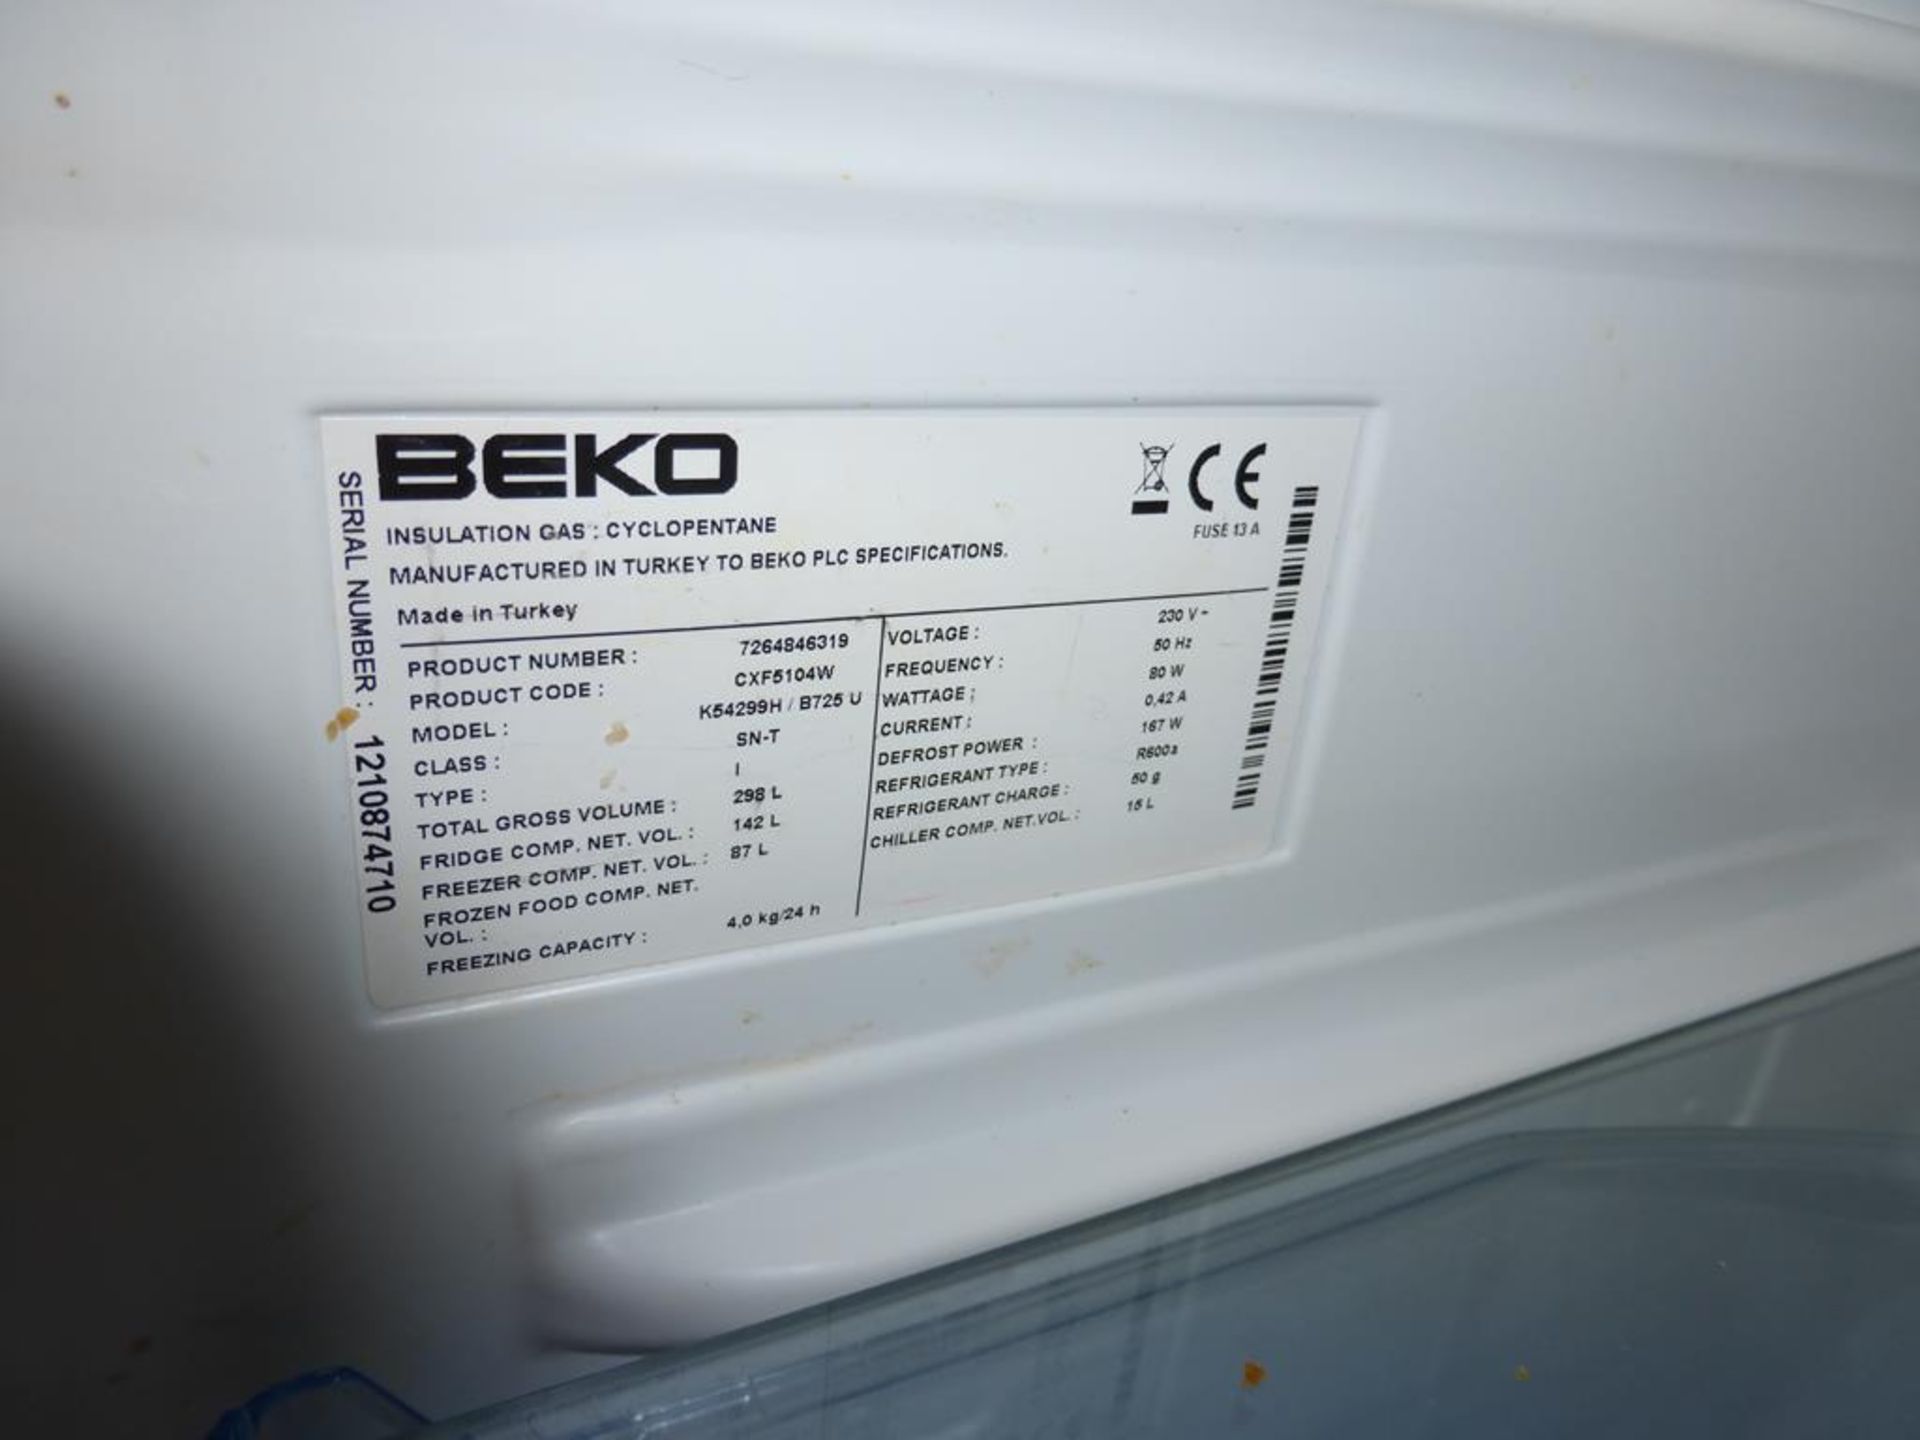 Beko Model K54299H/B725U Fridge Freezer - Image 2 of 2